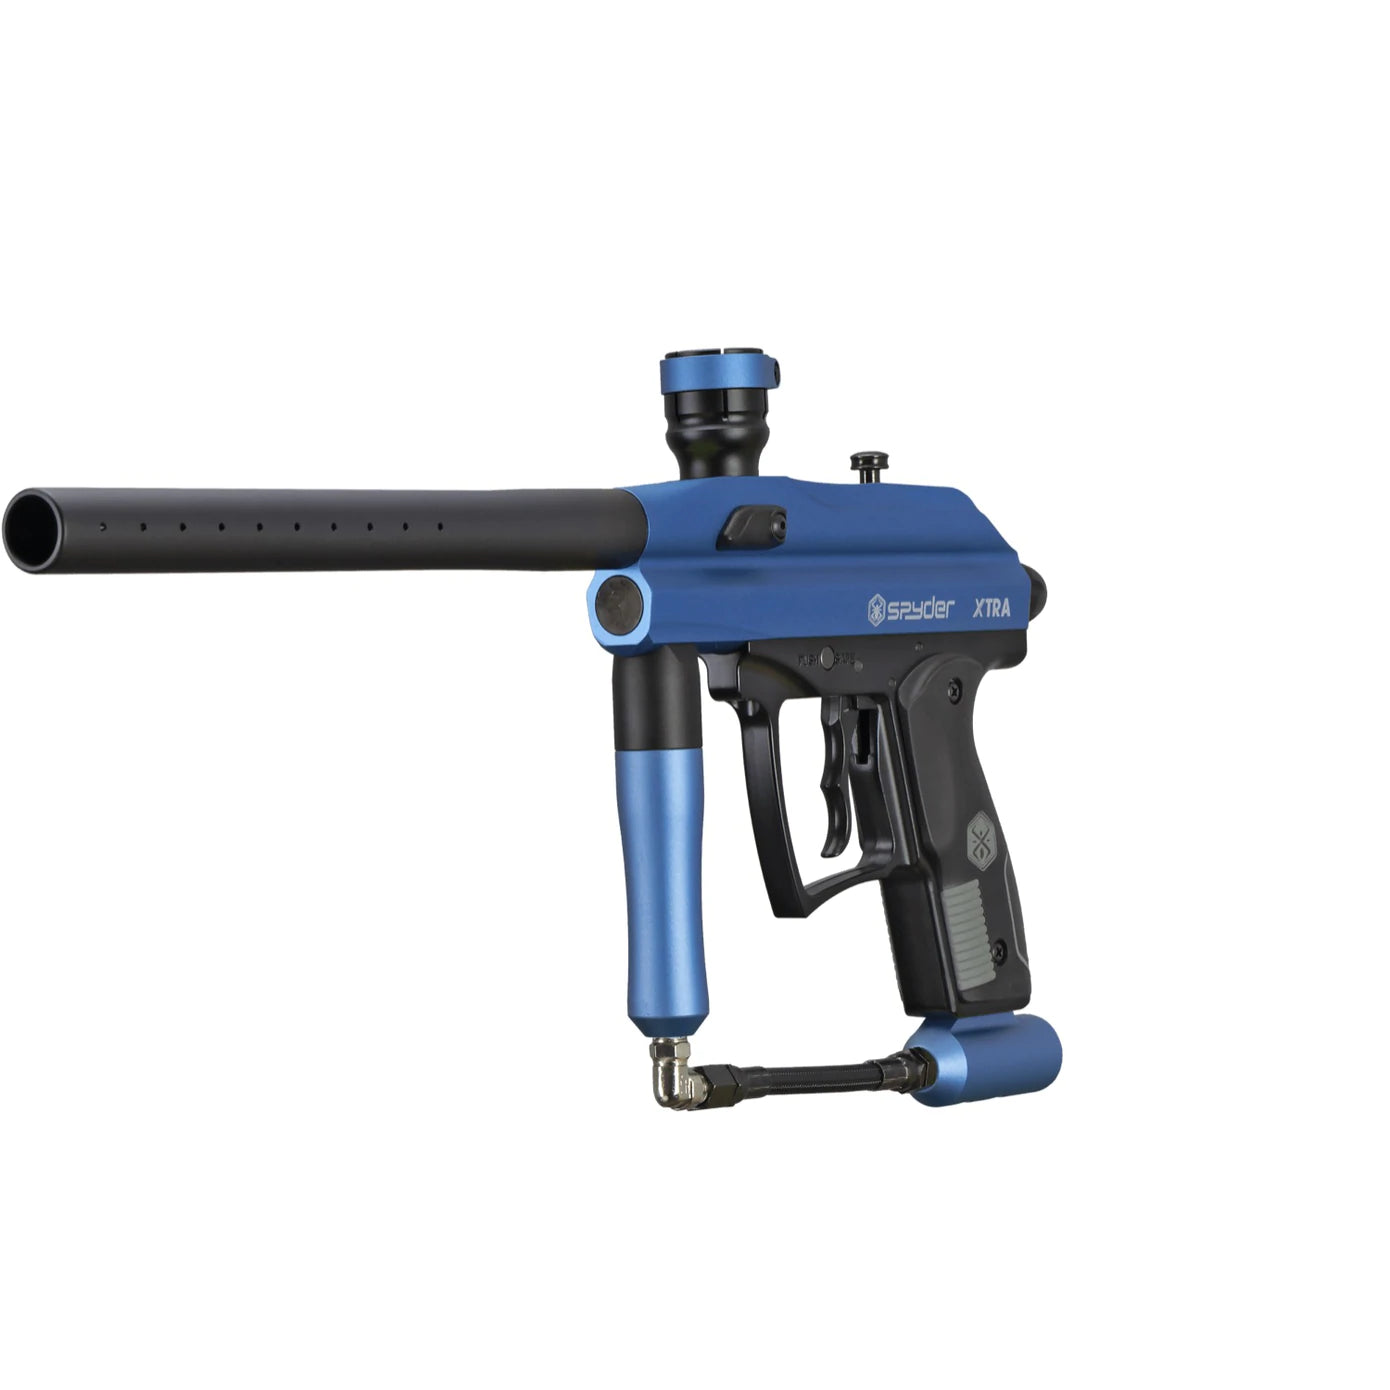 Spyder Xtra Paintball Marker | Multi Color | Shop Paintball Gun Online